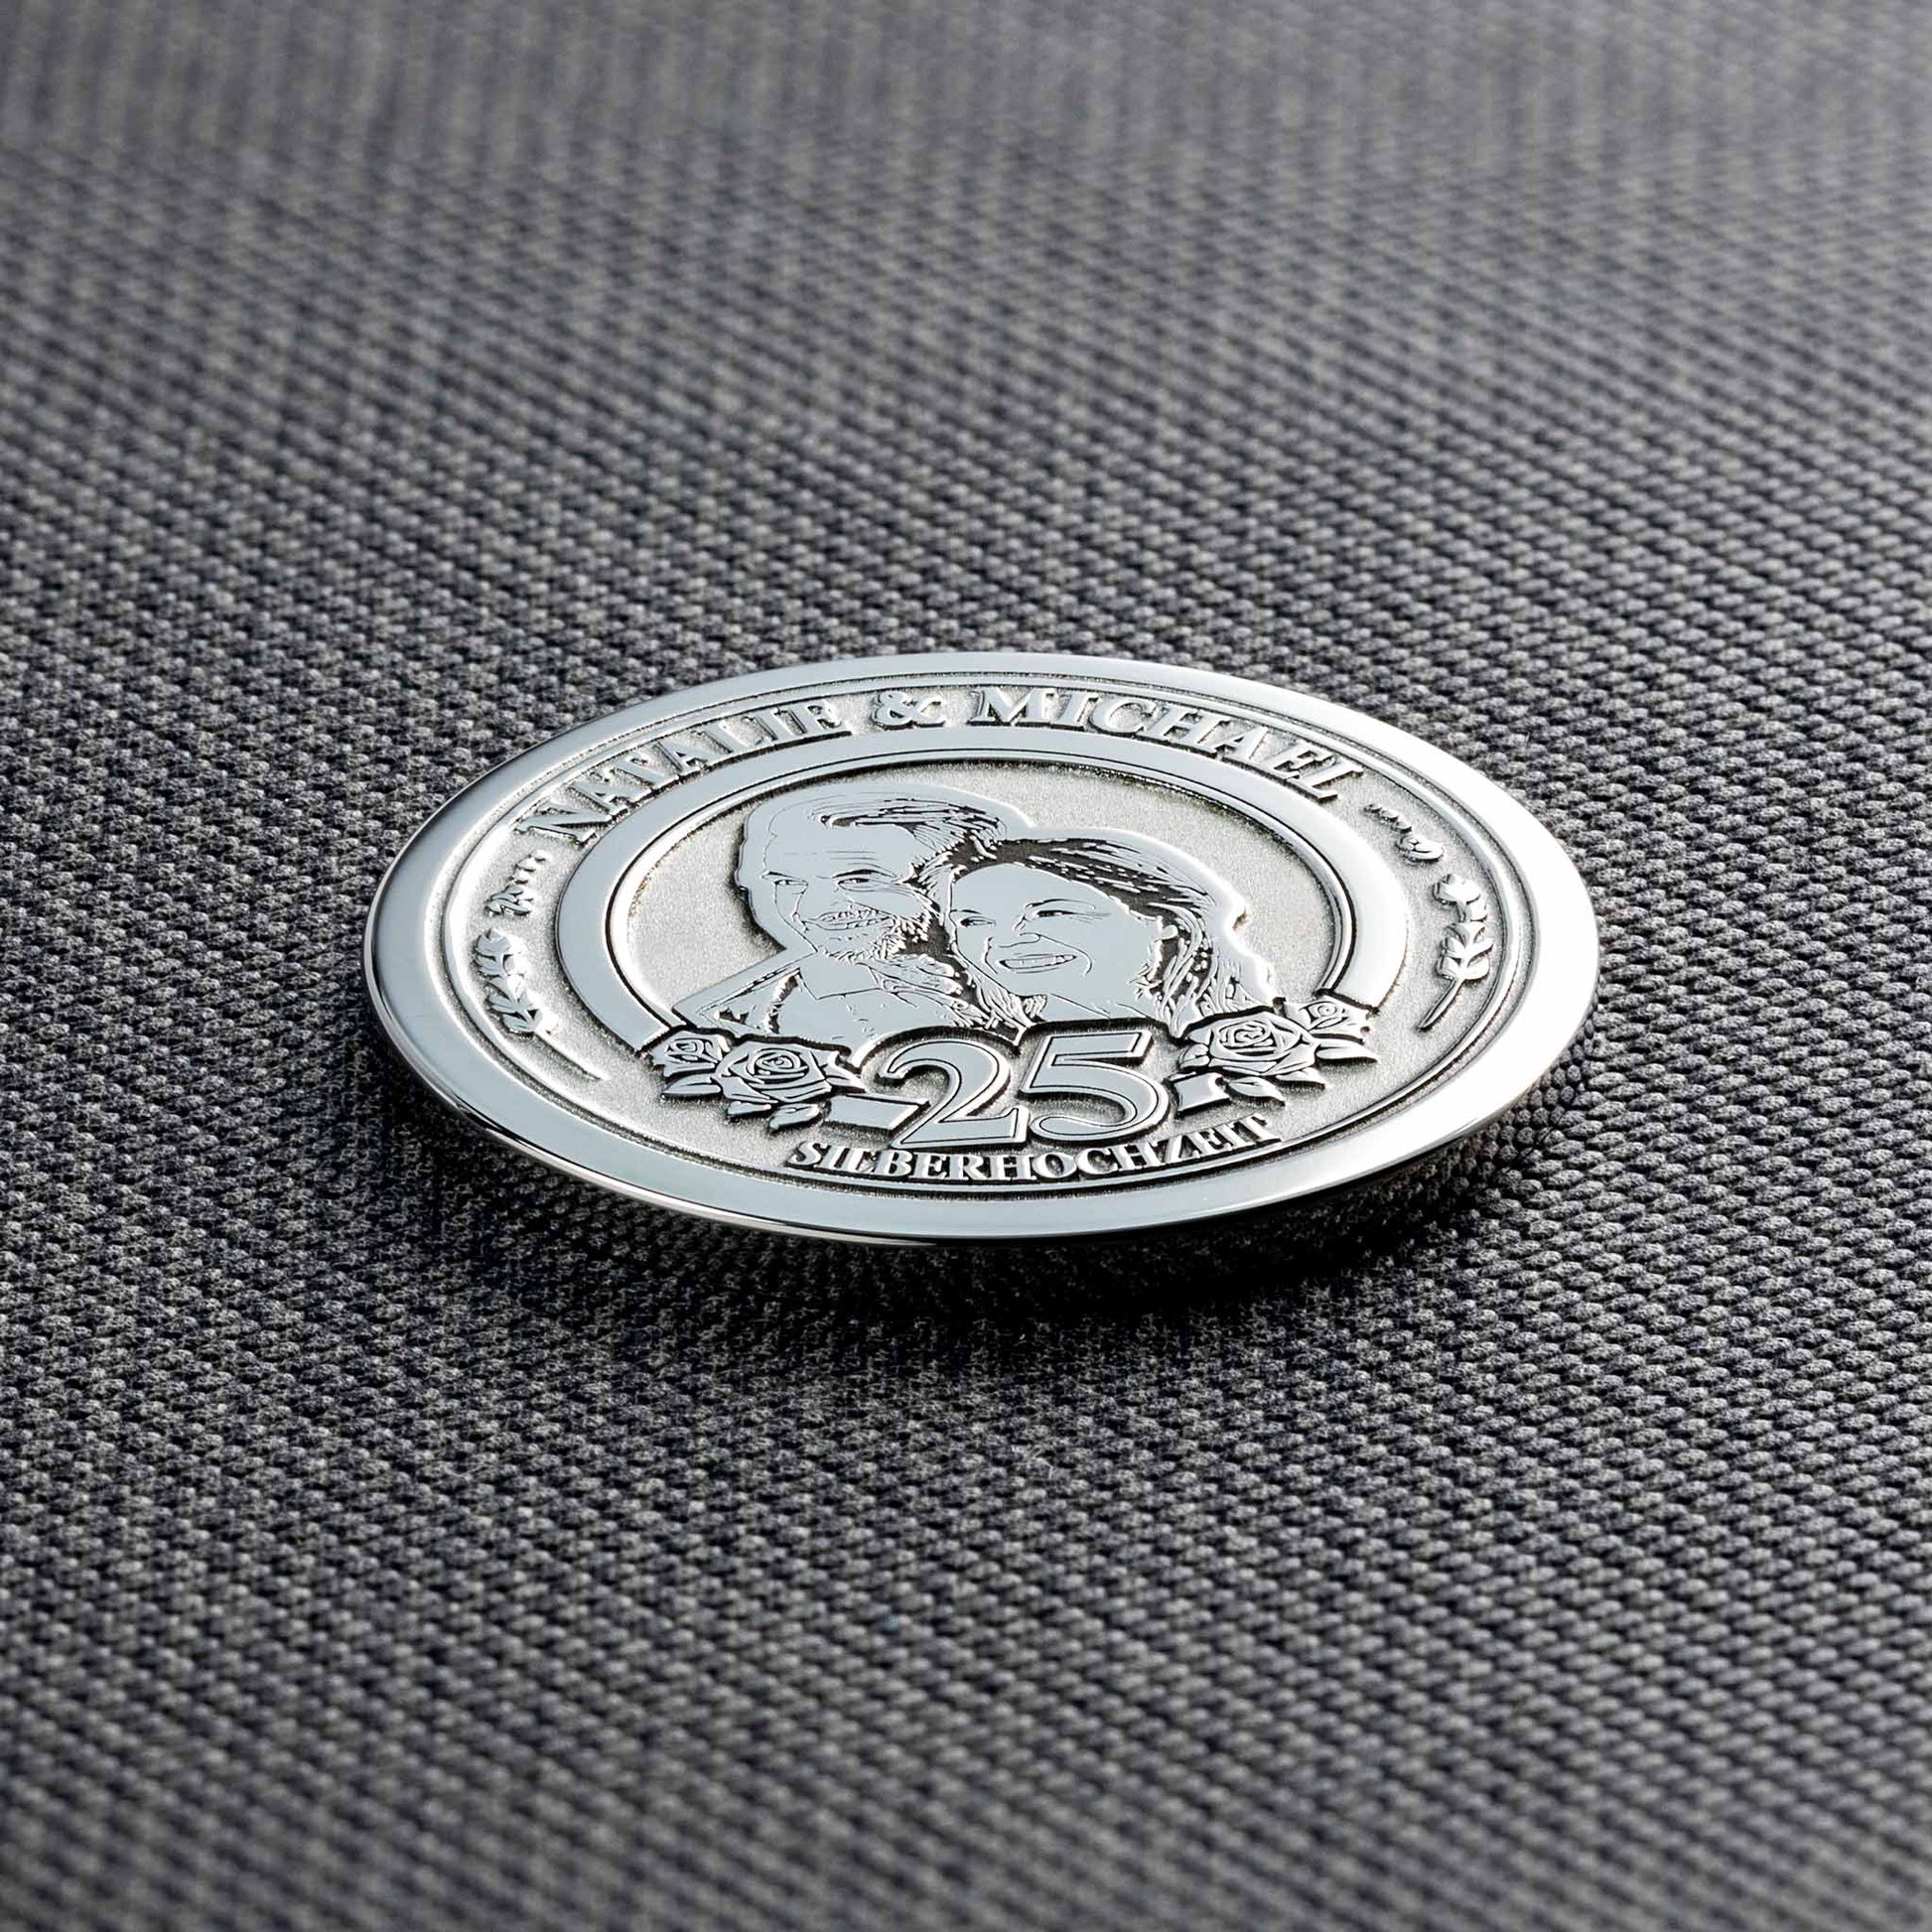 Unique Silver Wedding Anniversary Gift - Customised Commemorative Coin - seQua.Shop